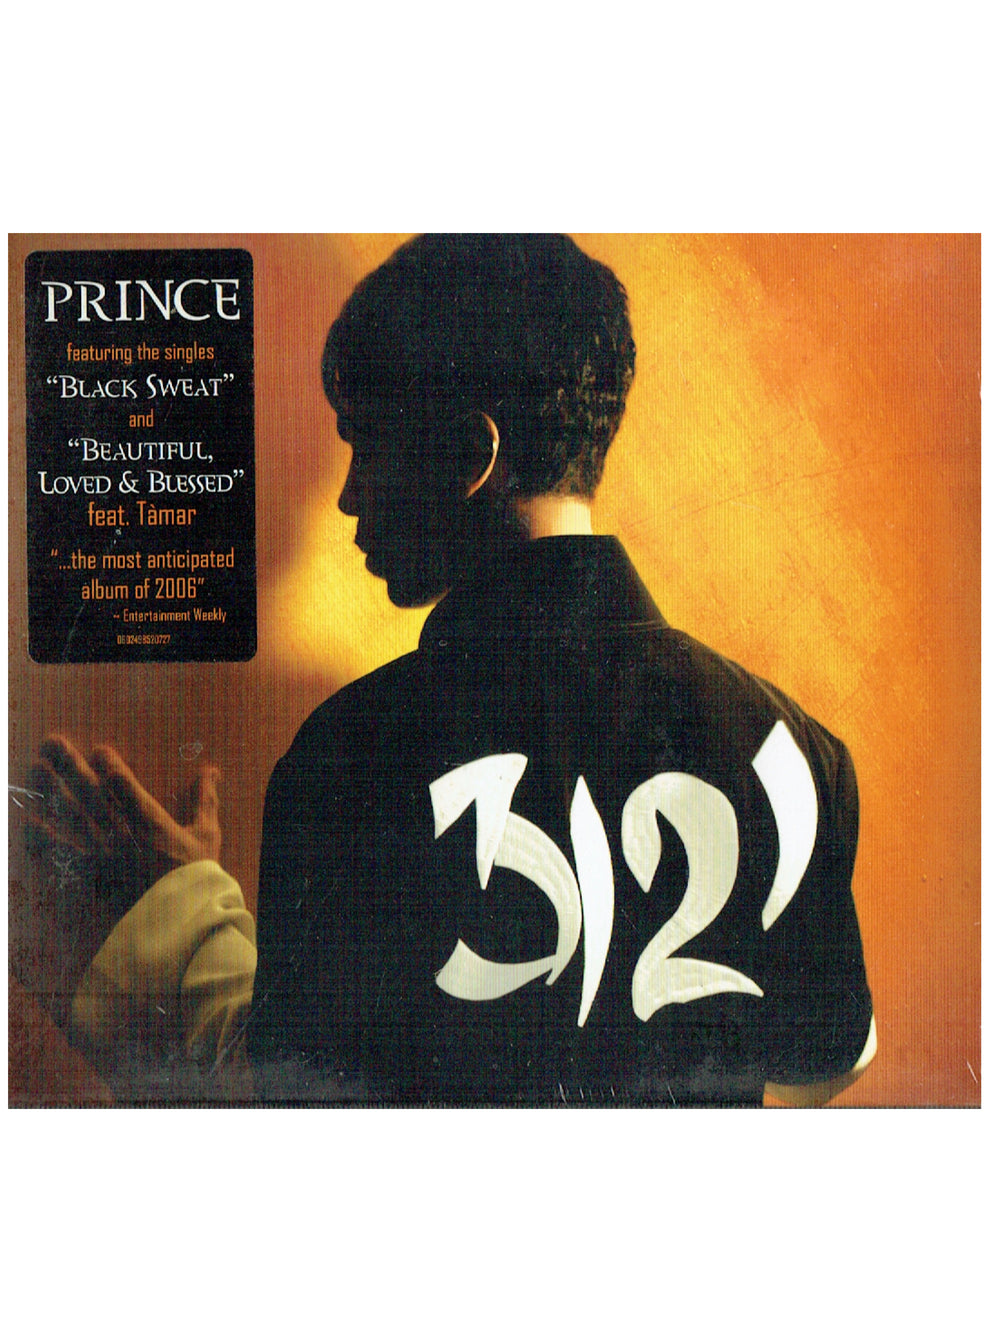 Prince – 3121 CD Album Digipak US Sealed As NEW: 2006